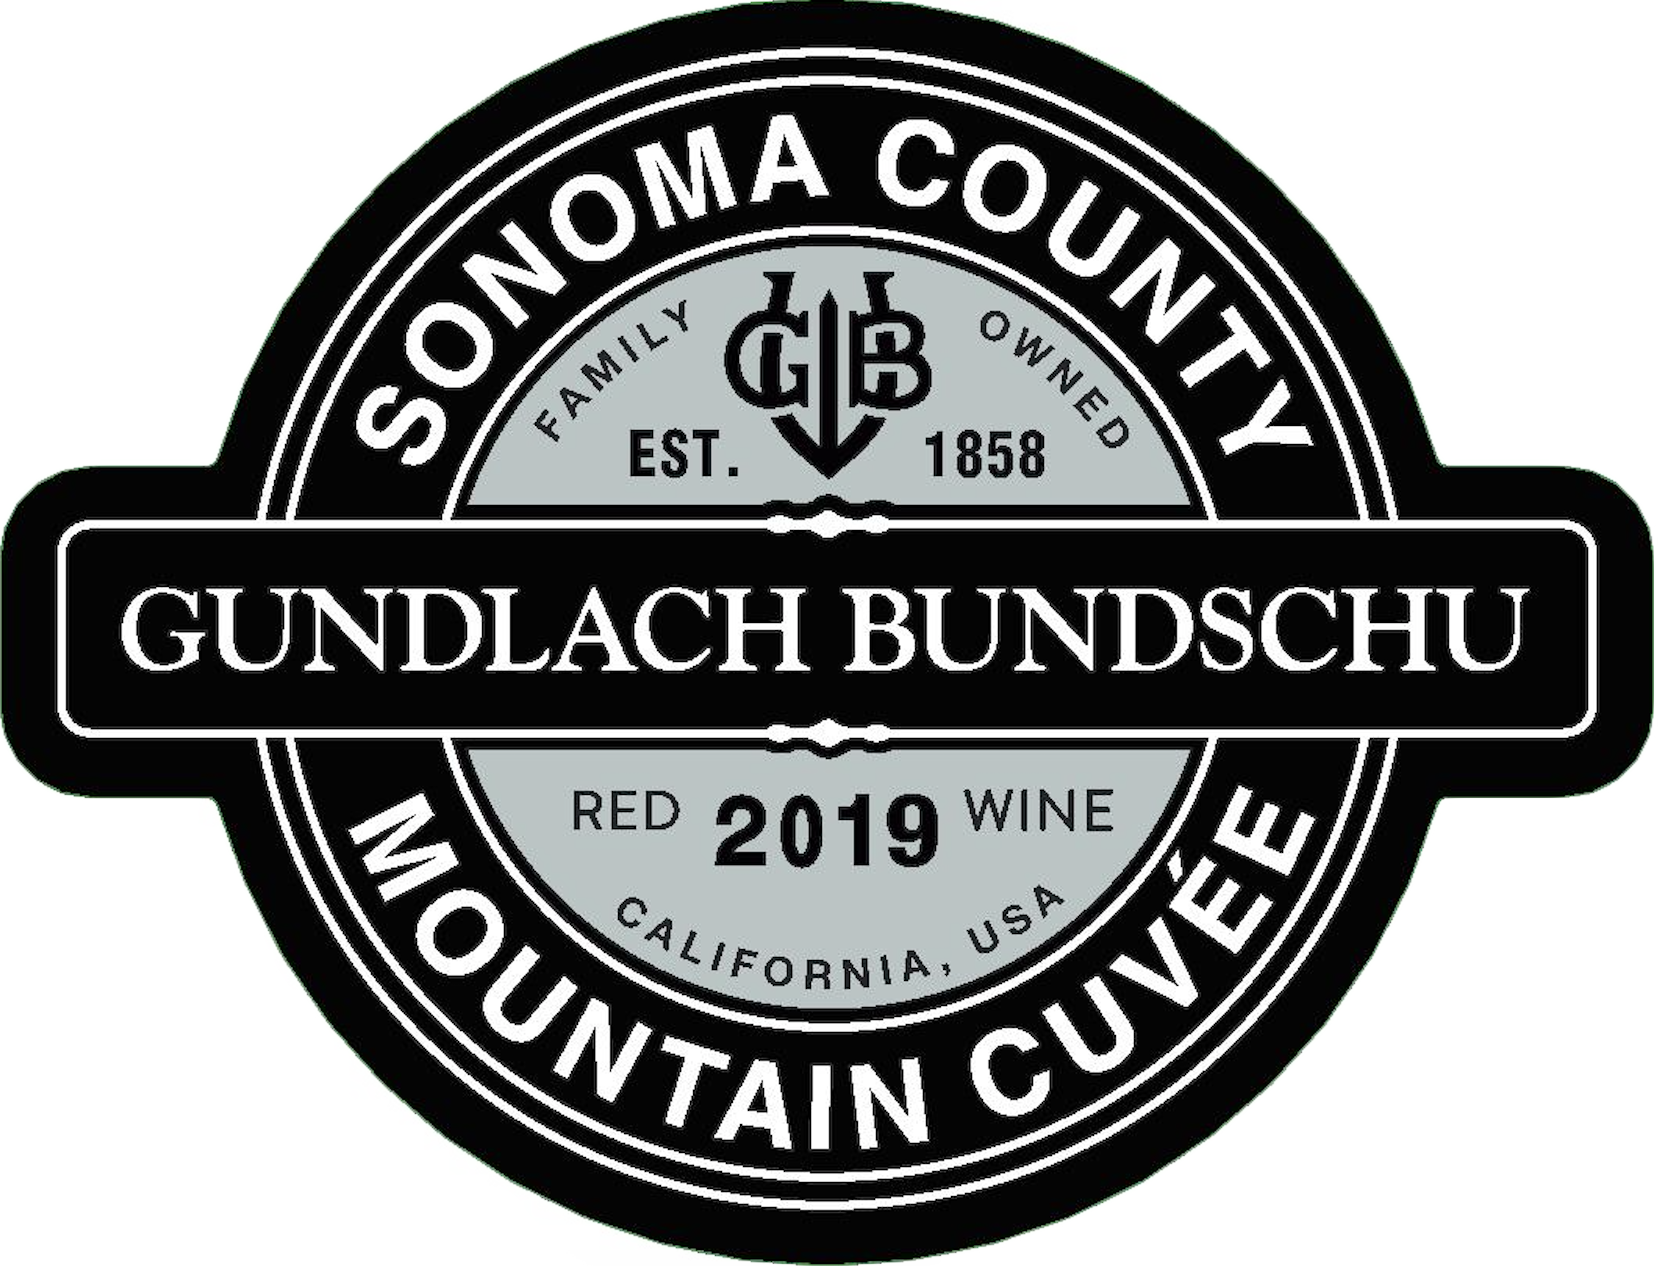 2019 Gundelach Bundschu Mountain cuvee logo